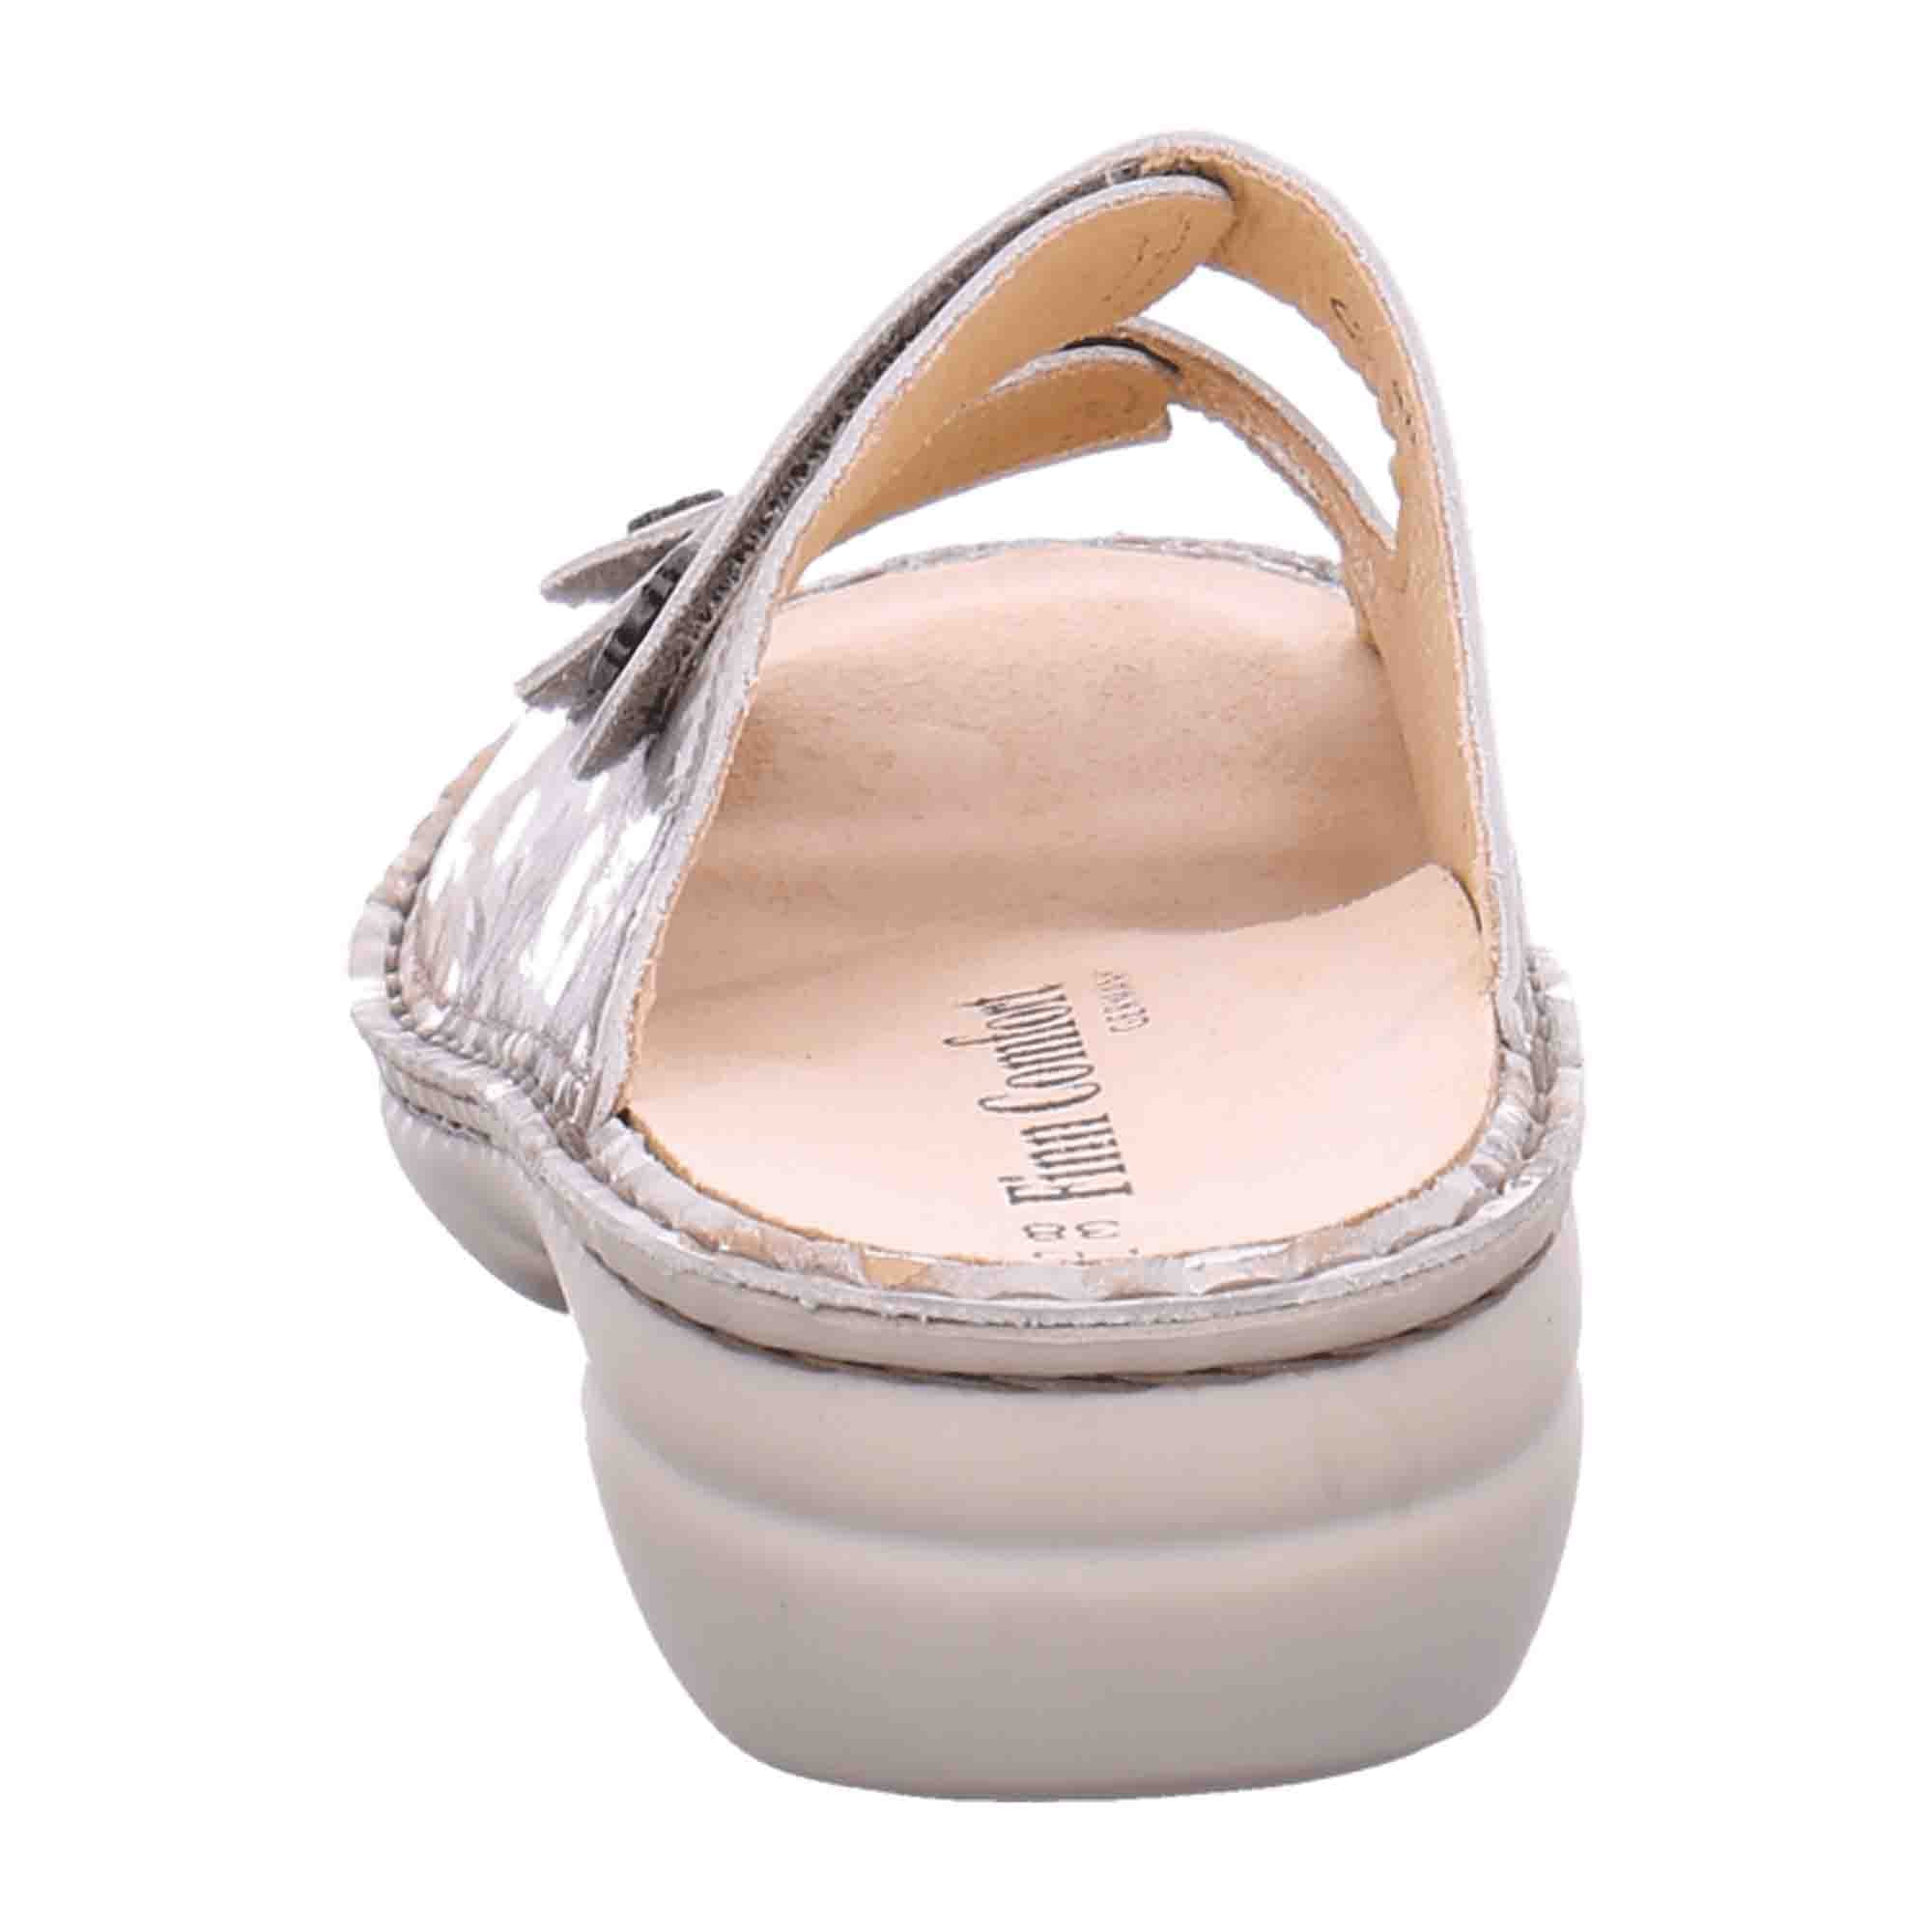 Finn Comfort Menorca-S Silver Sandals for Women - Stylish & Comfortable